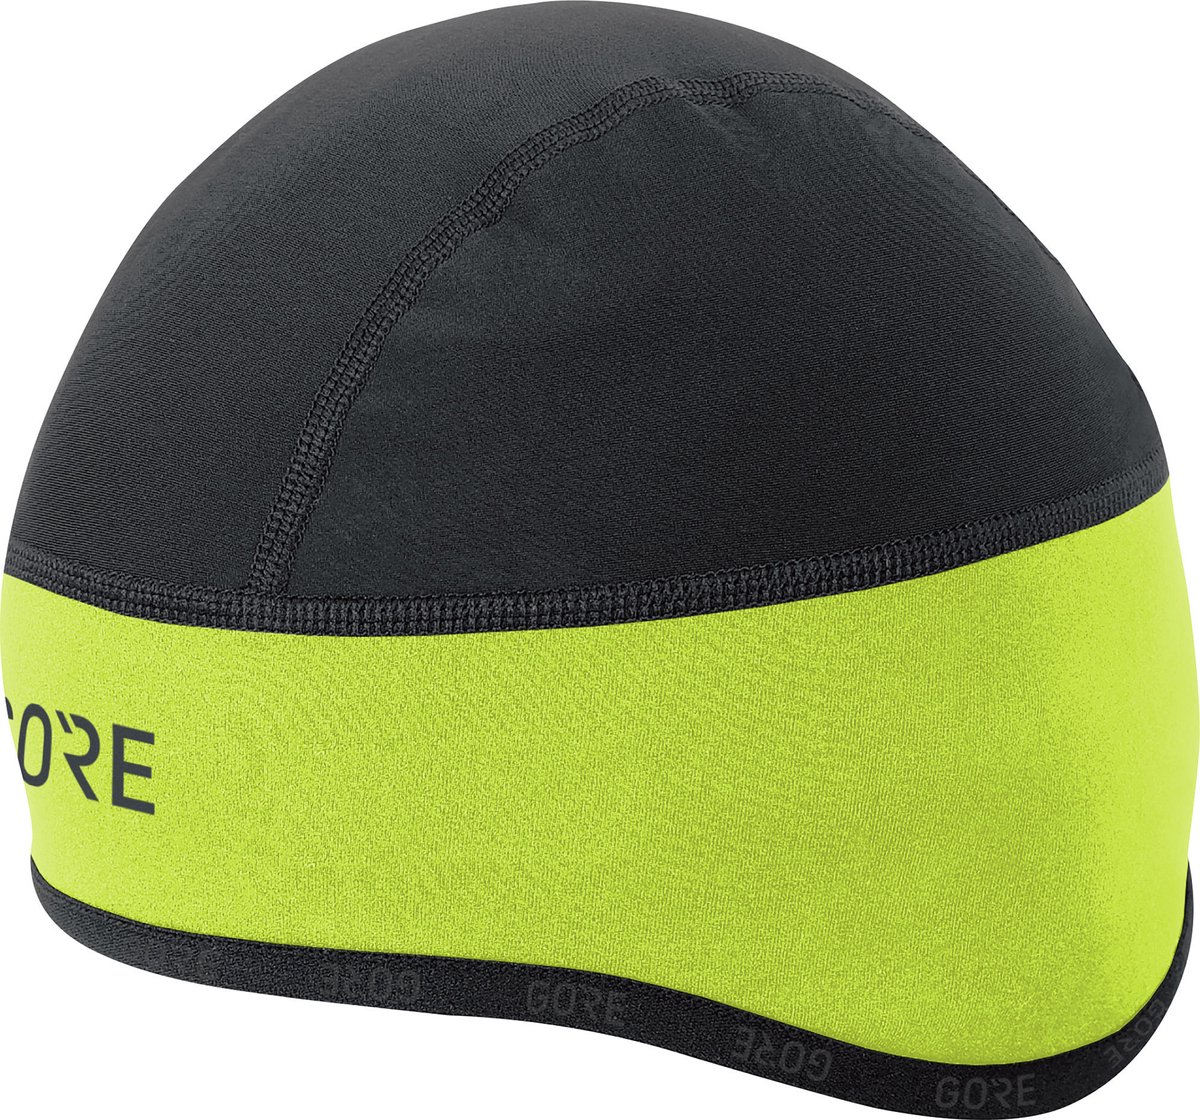 GORE WEAR Gore C3 GWS Helmet Cap - Neon Yellow/black